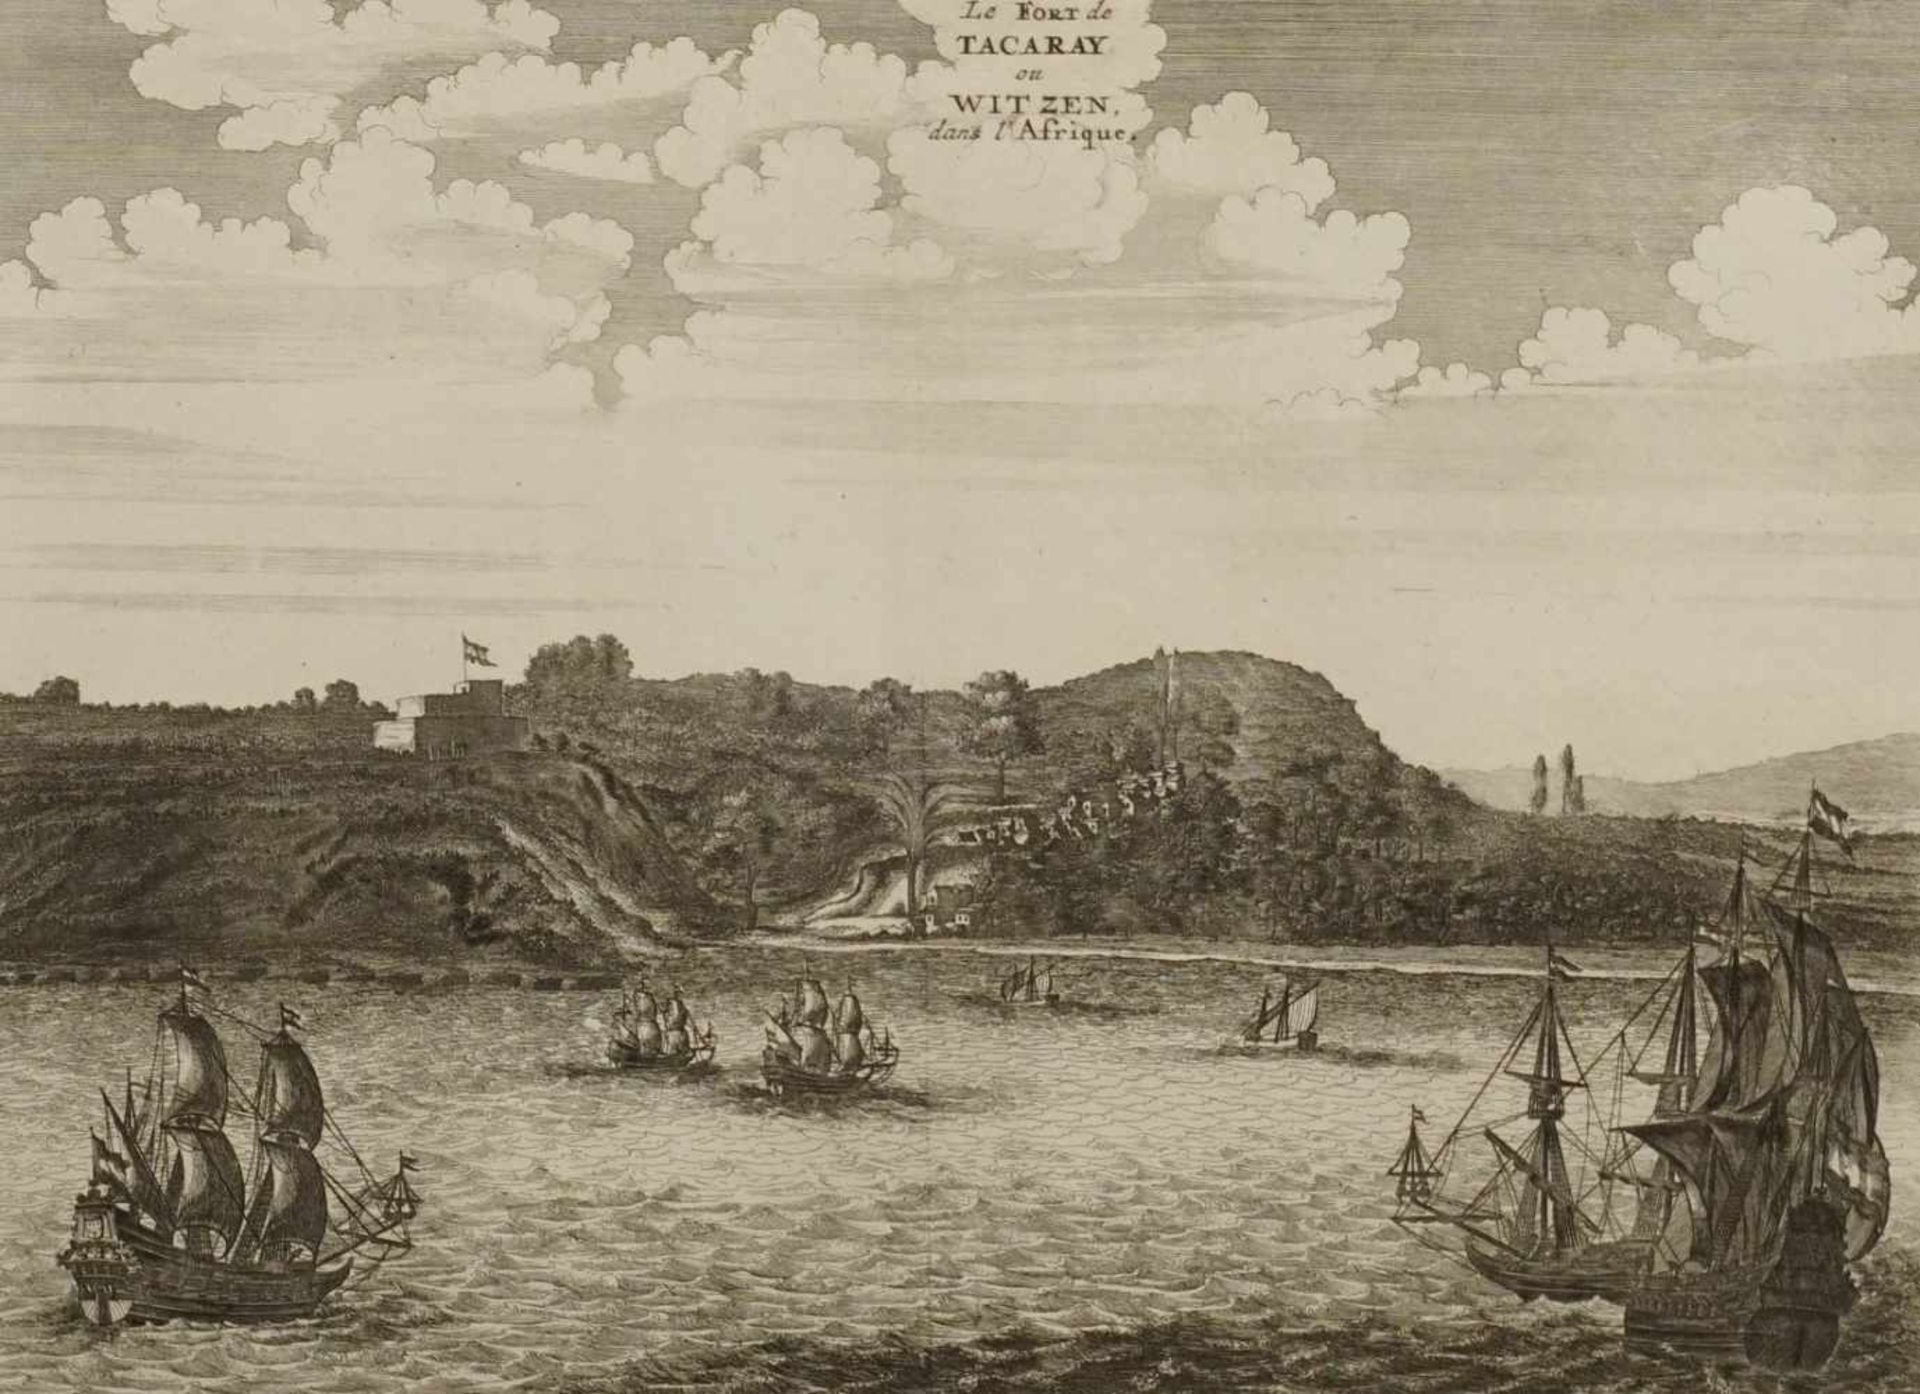 Pieter van der Aa, "Le Fort de Tacaray ou Witzen dans l'Afrique (Festung Tacaray, Ghana,